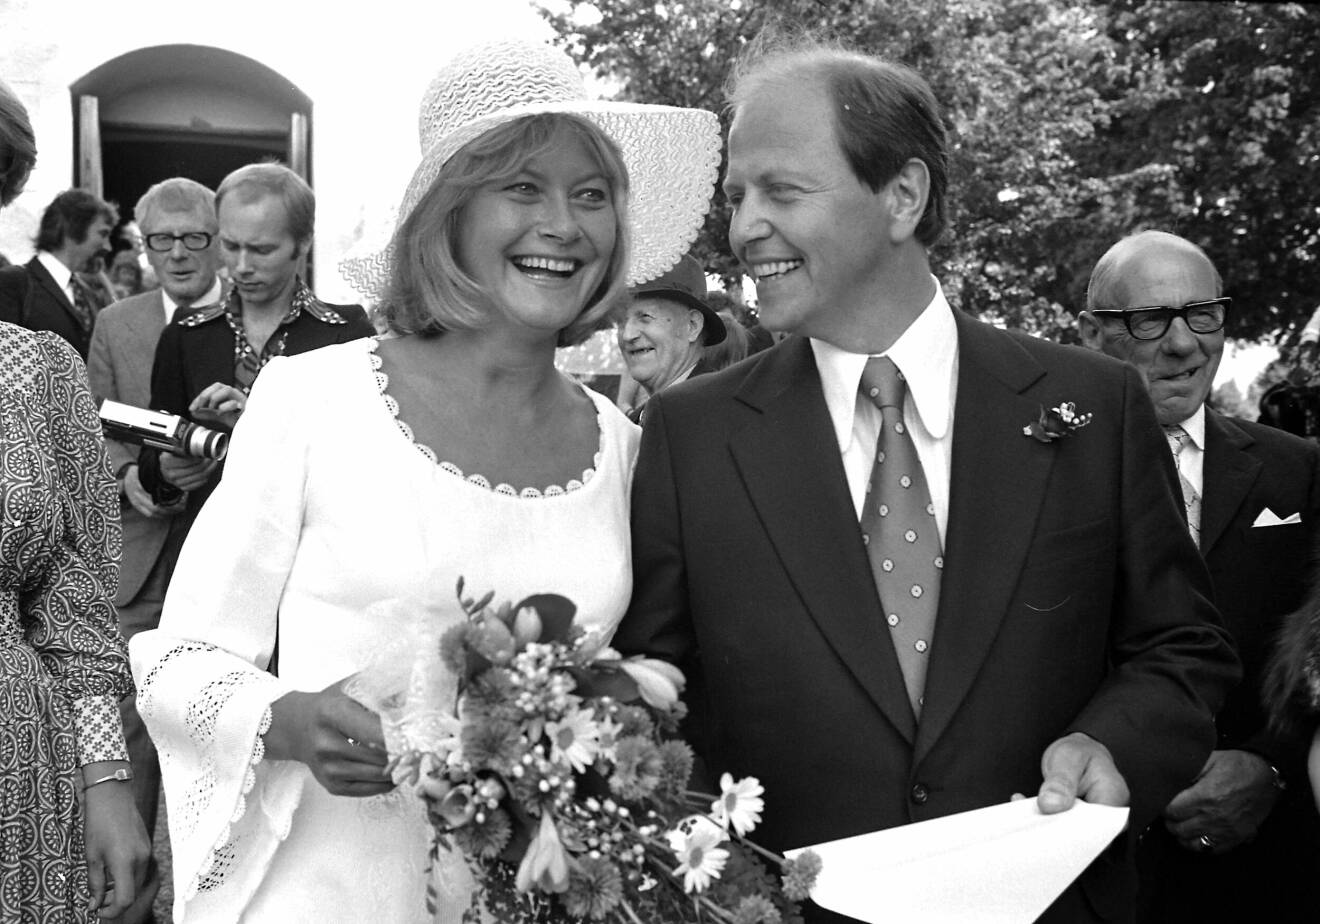 Artisten Monica Zetterlund och musikern Sture Åkerberg bröllop år 1974.